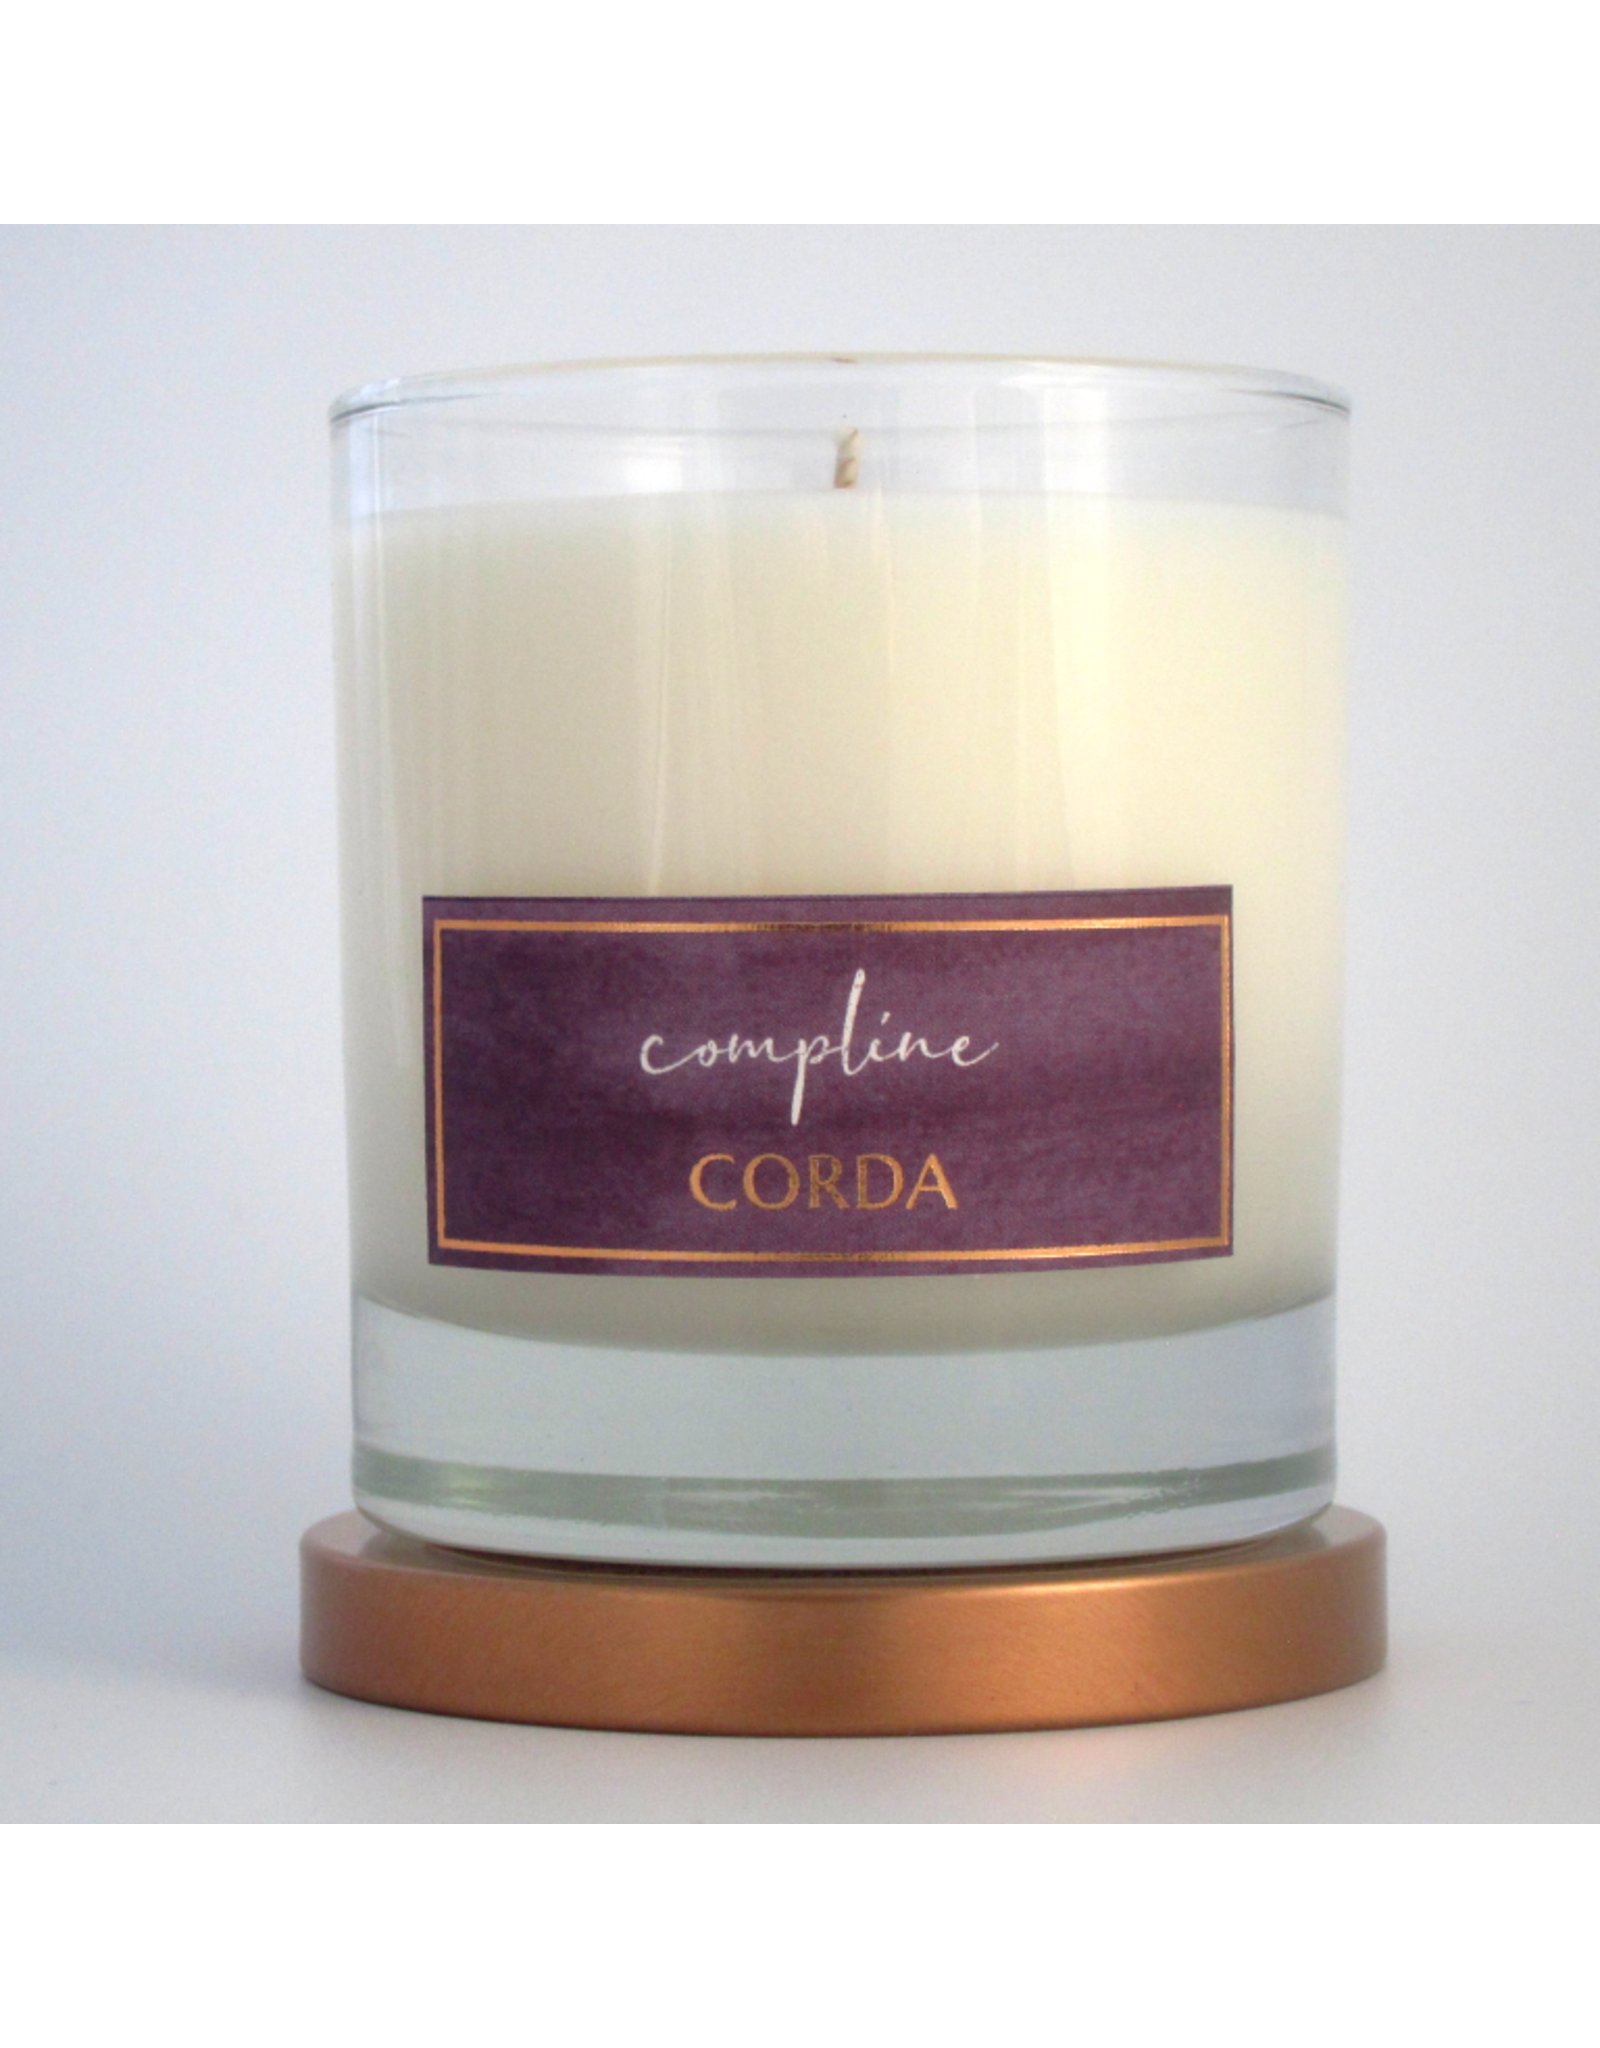 Corda Compline | Night Prayer - Dark Amber & Vanilla & Lavender